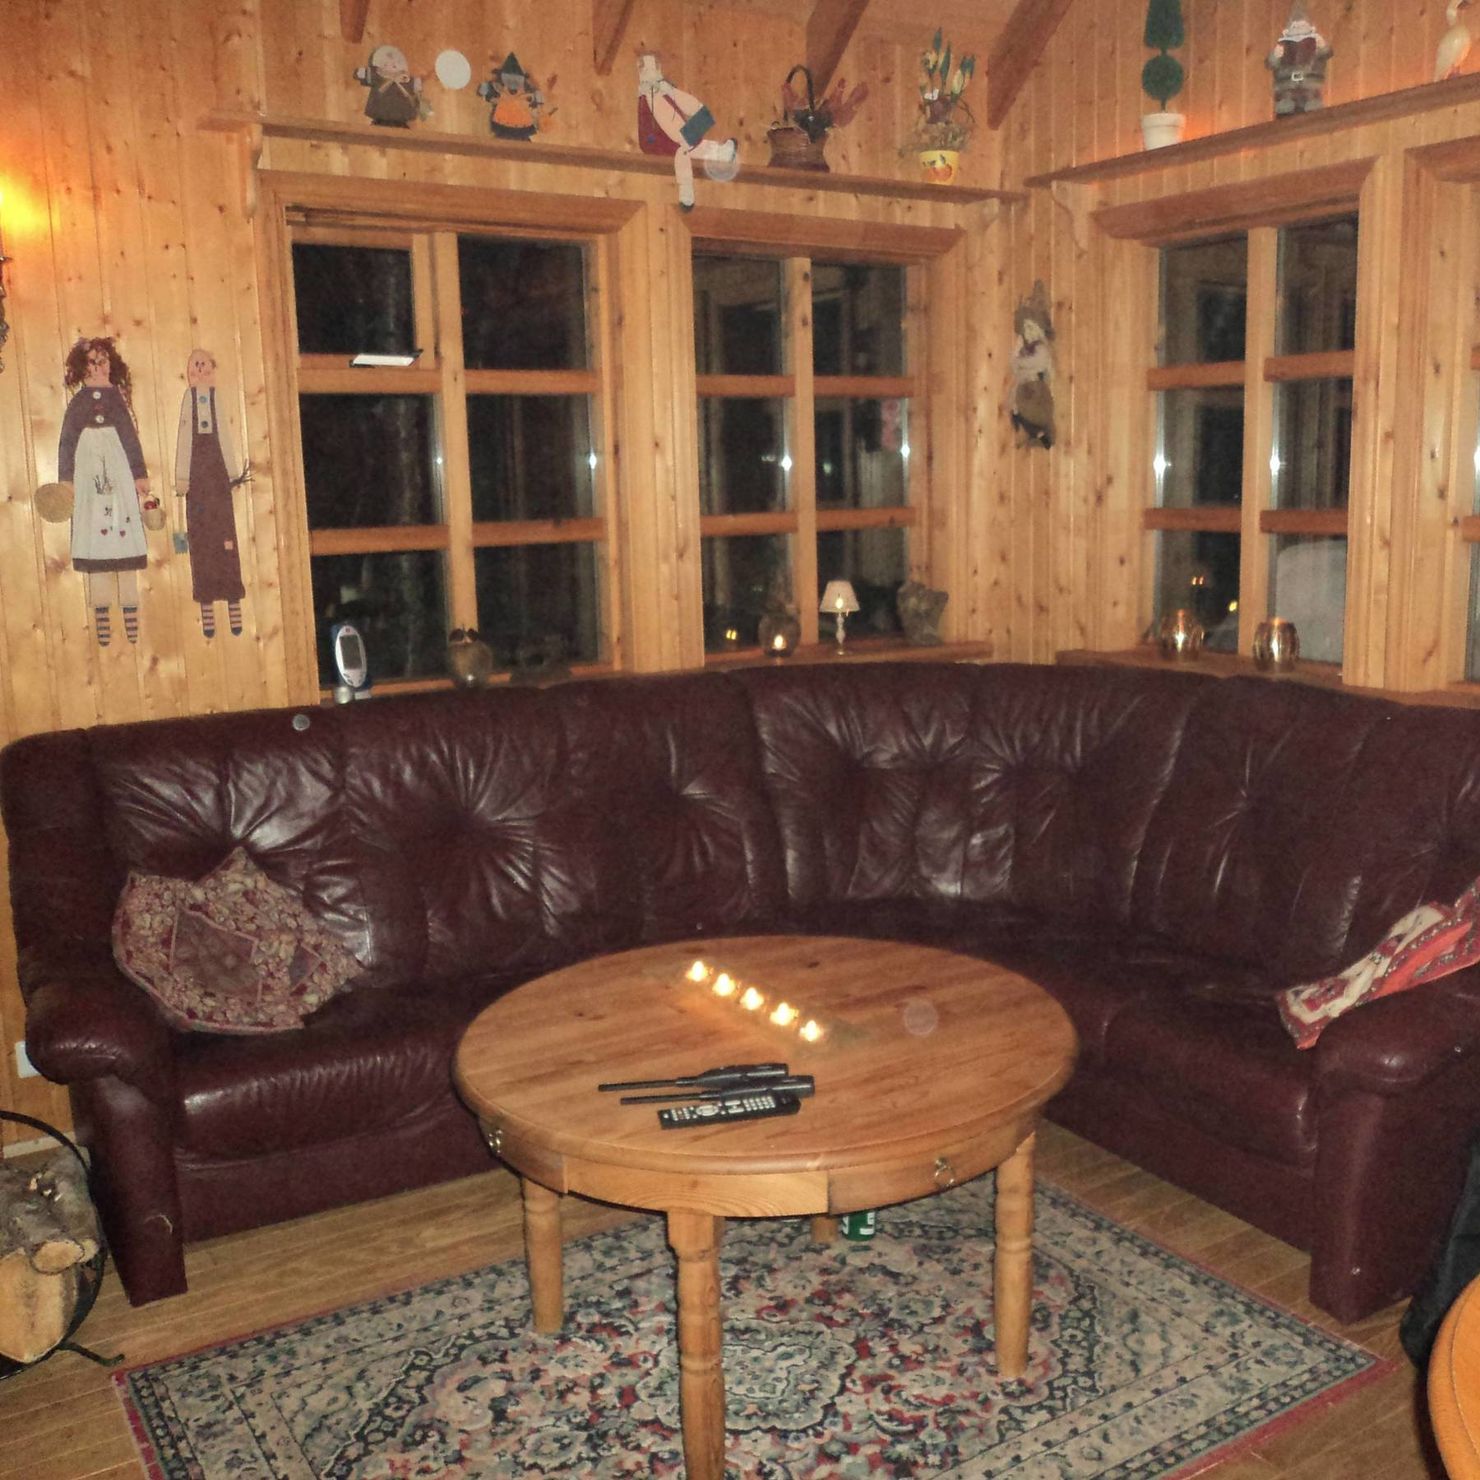 Cozy living room